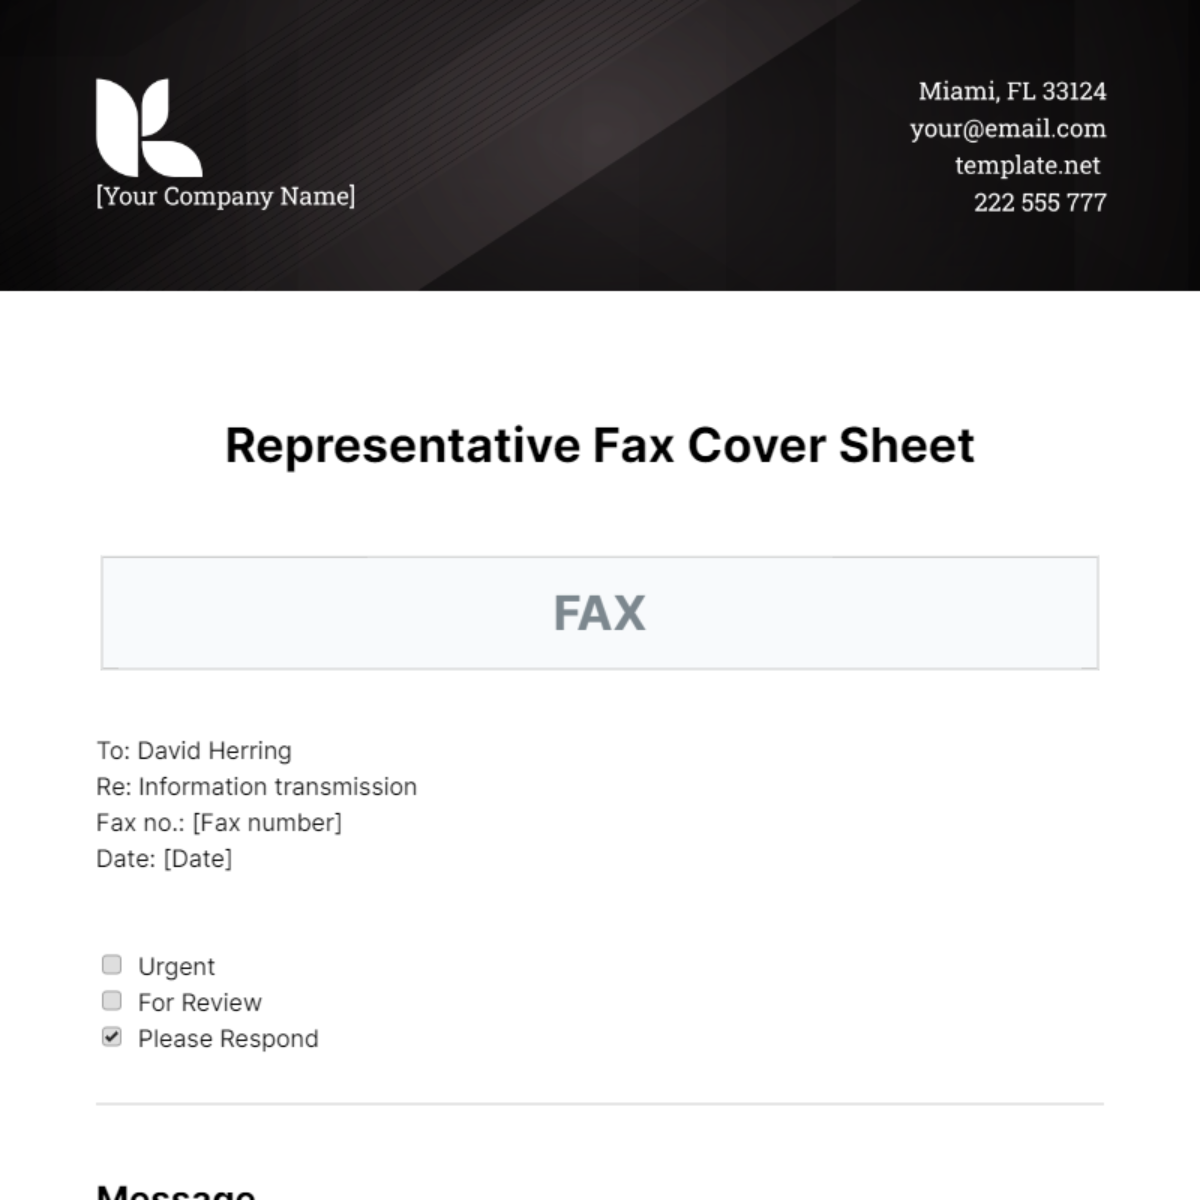 Representative Fax Cover Sheet